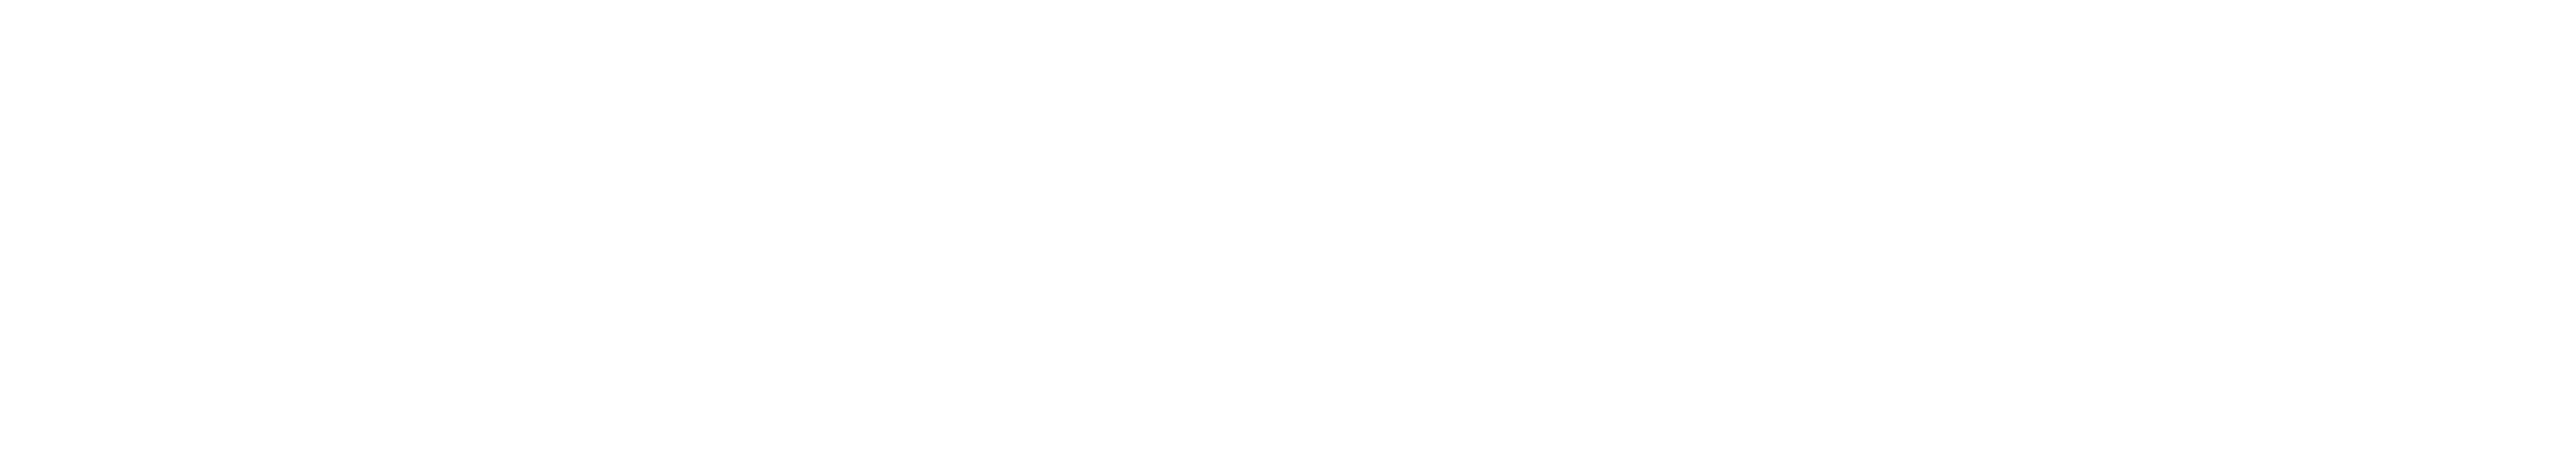 Sorority House Massacre